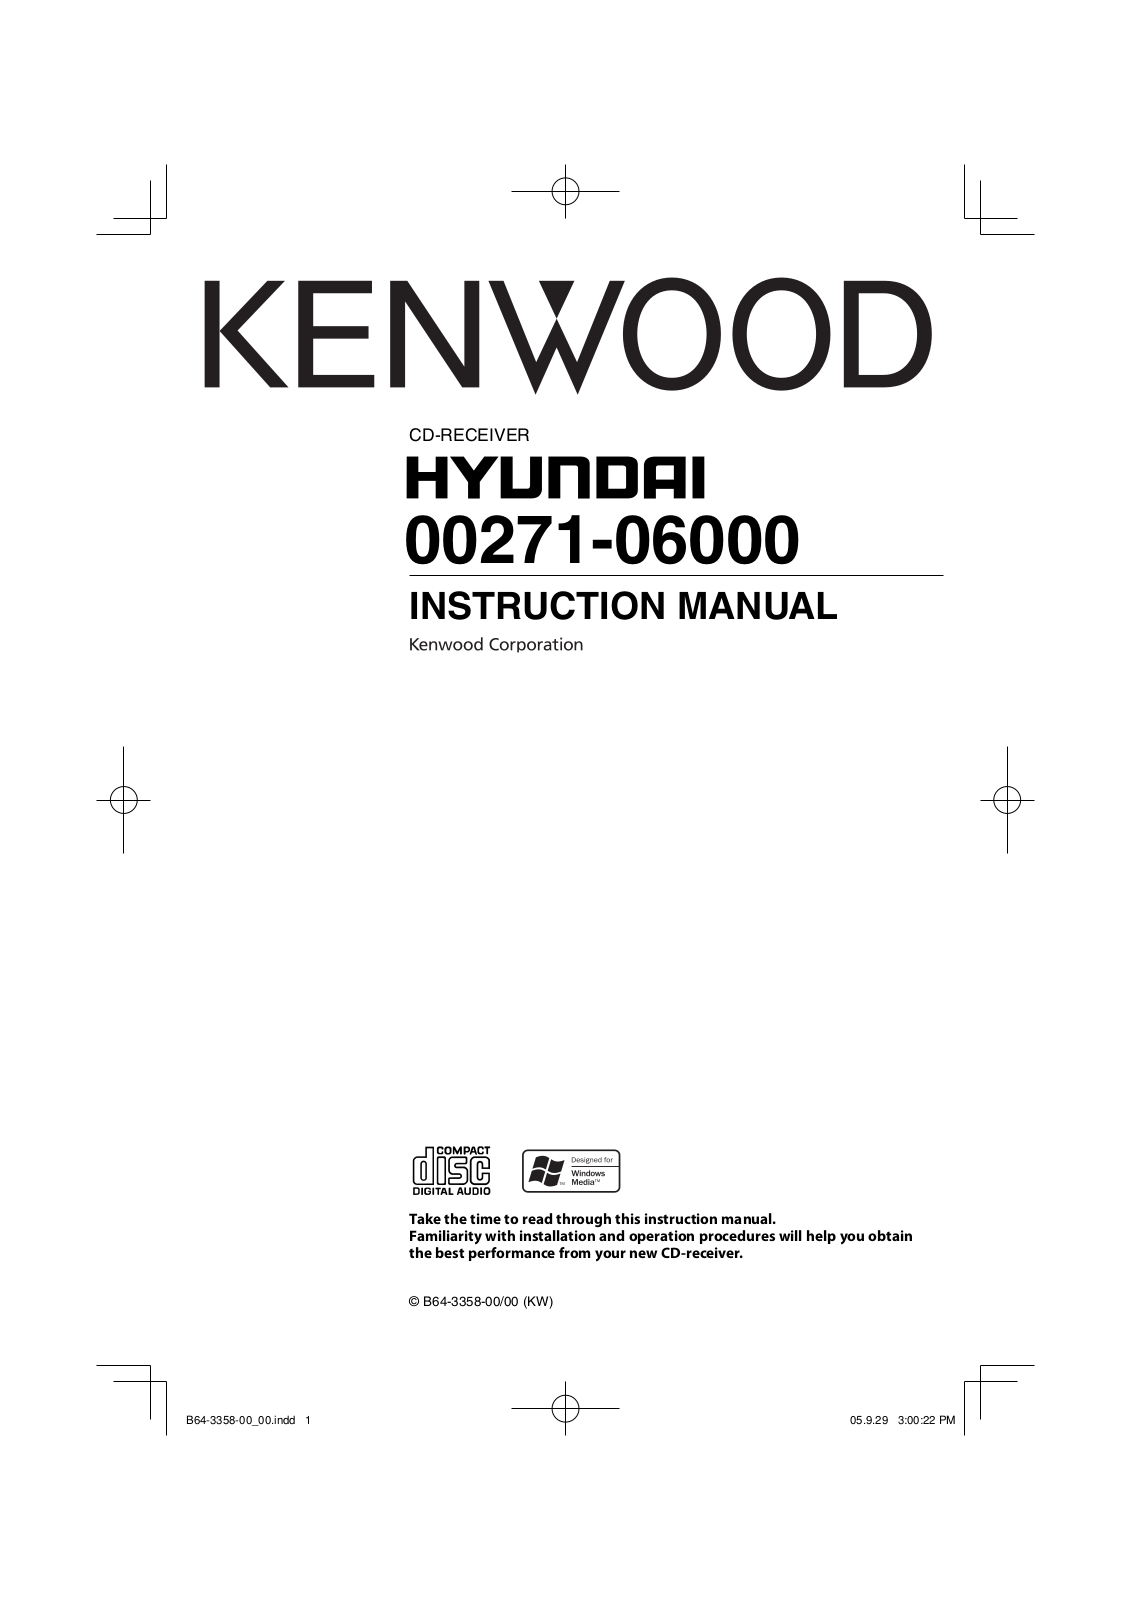 Kenwood HYUNDAI_00271-06000 Manual